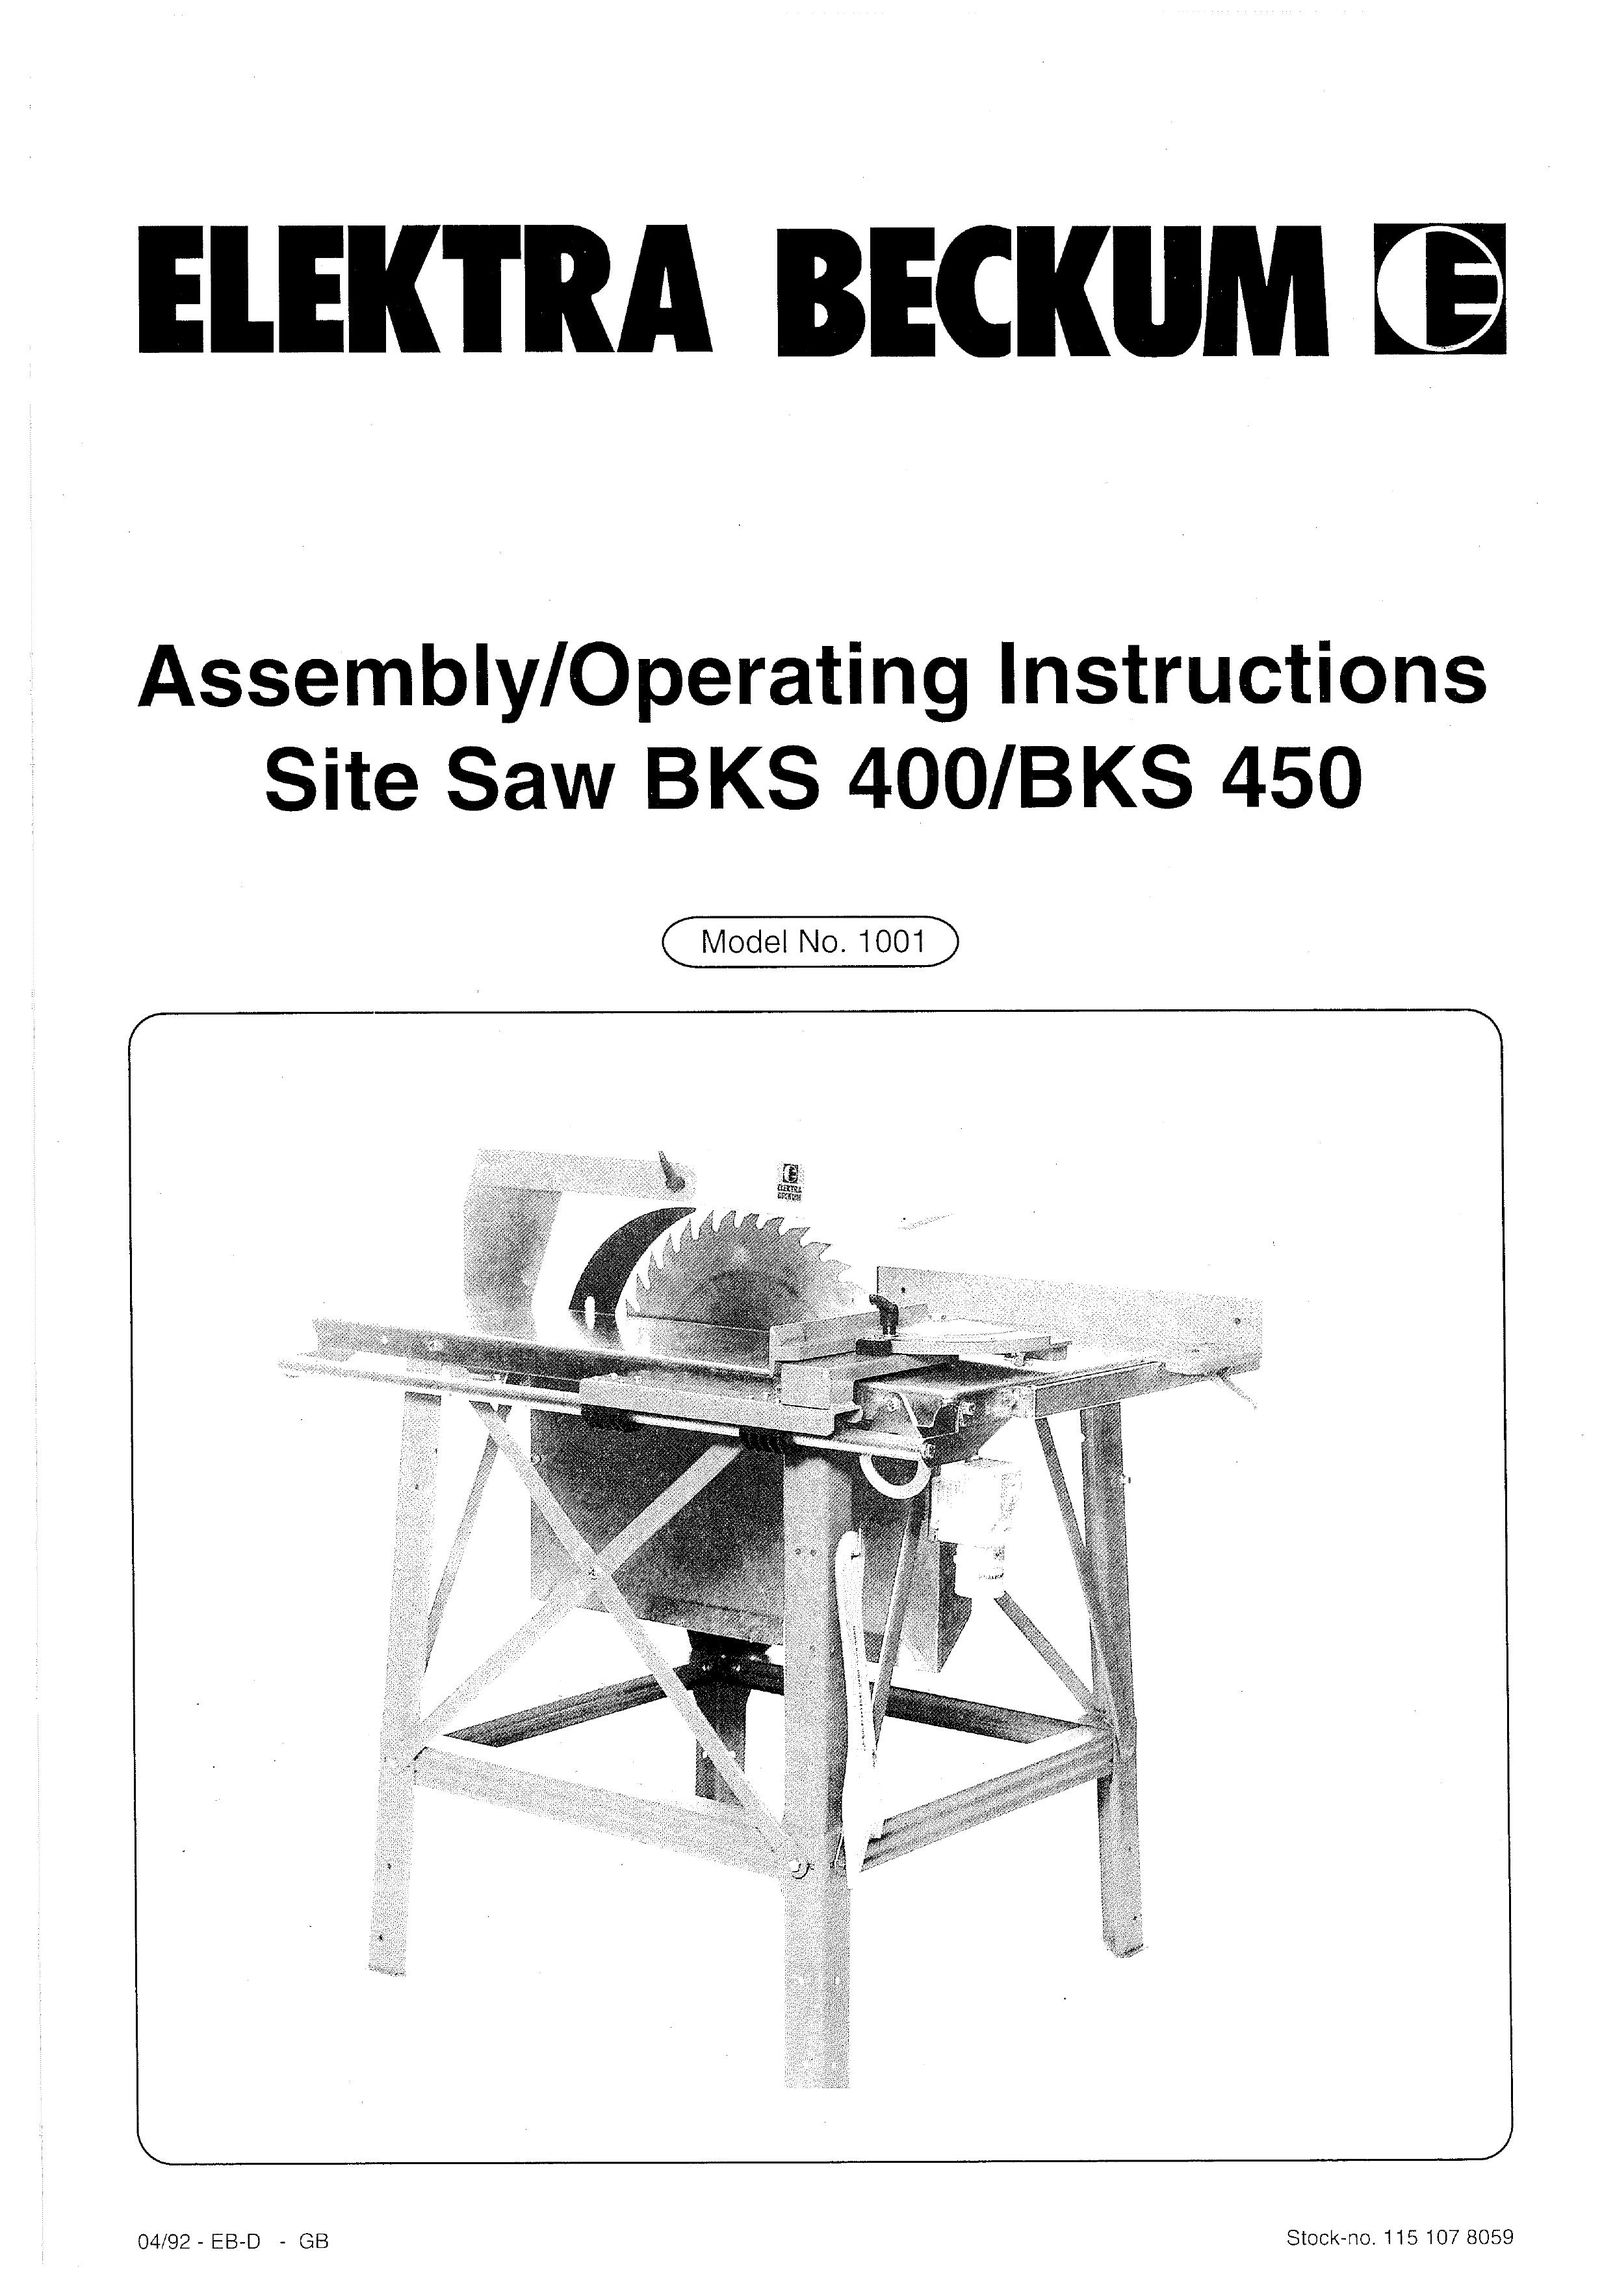 Elektra Beckum BKS 450 Saw User Manual